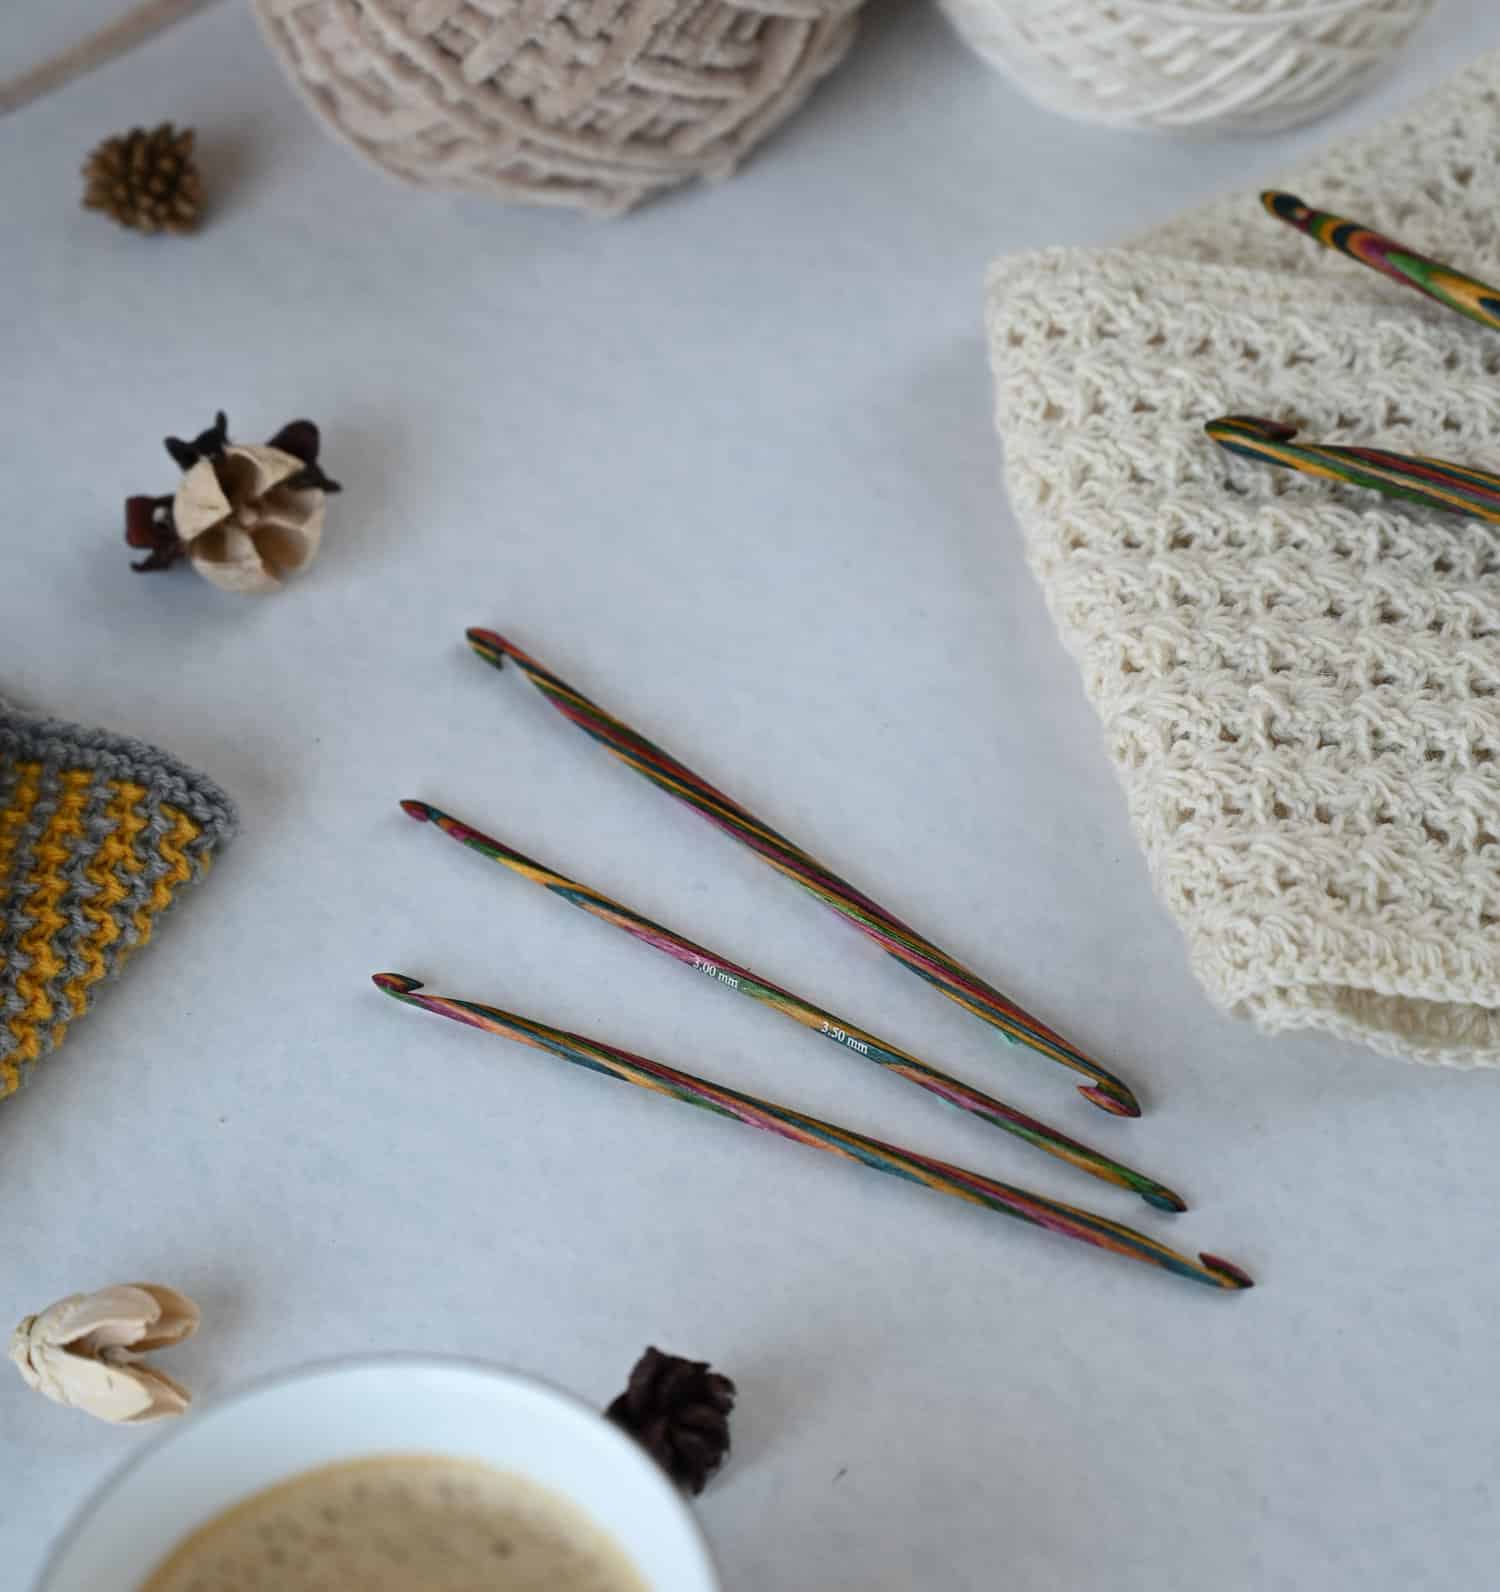 Tunisian crochet Hooks and how to use them 